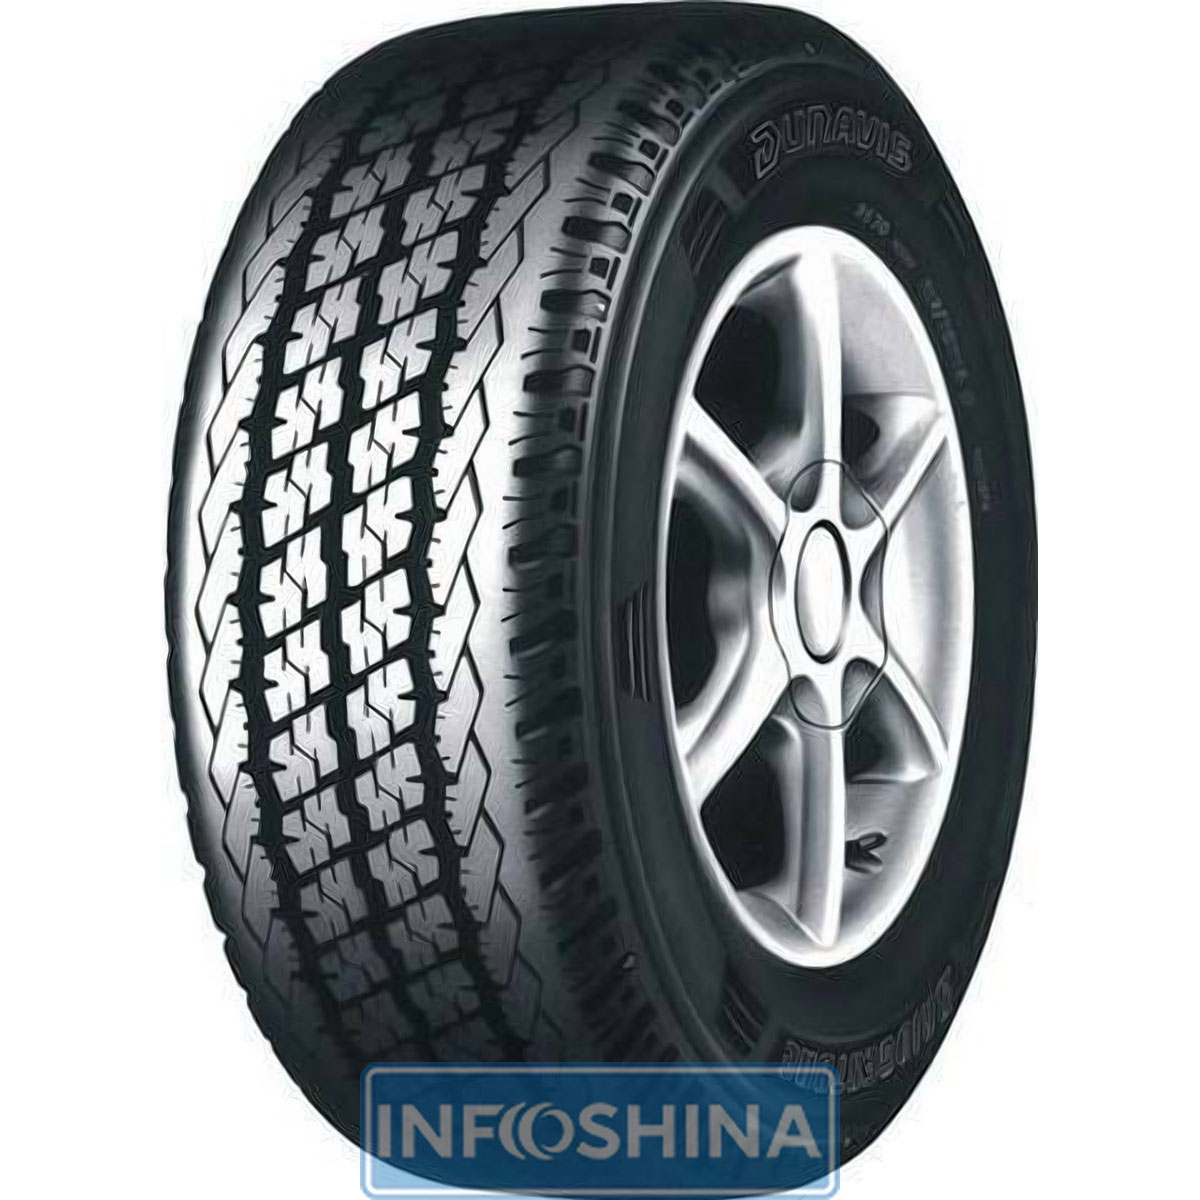 Купить шины Bridgestone Duravis R630 235/65 R16C 115/113R